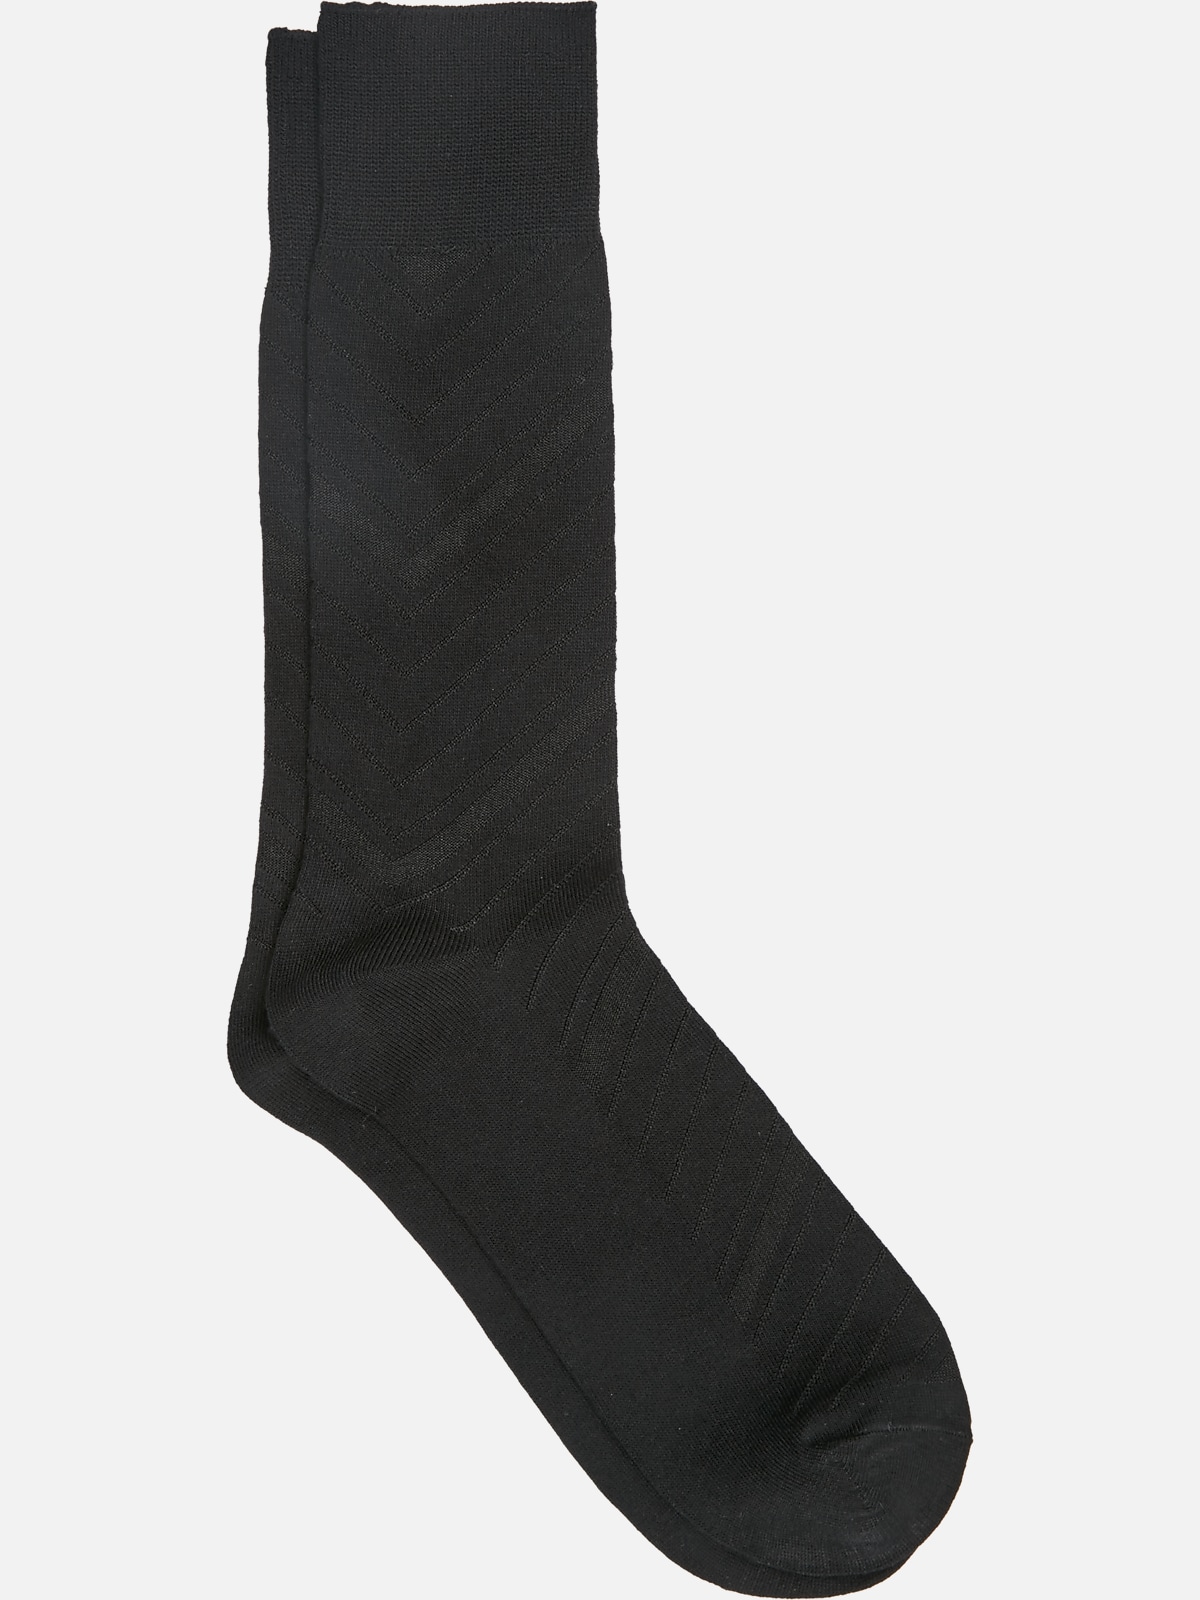 Pronto Uomo Socks | All Clearance $39.99| Men's Wearhouse